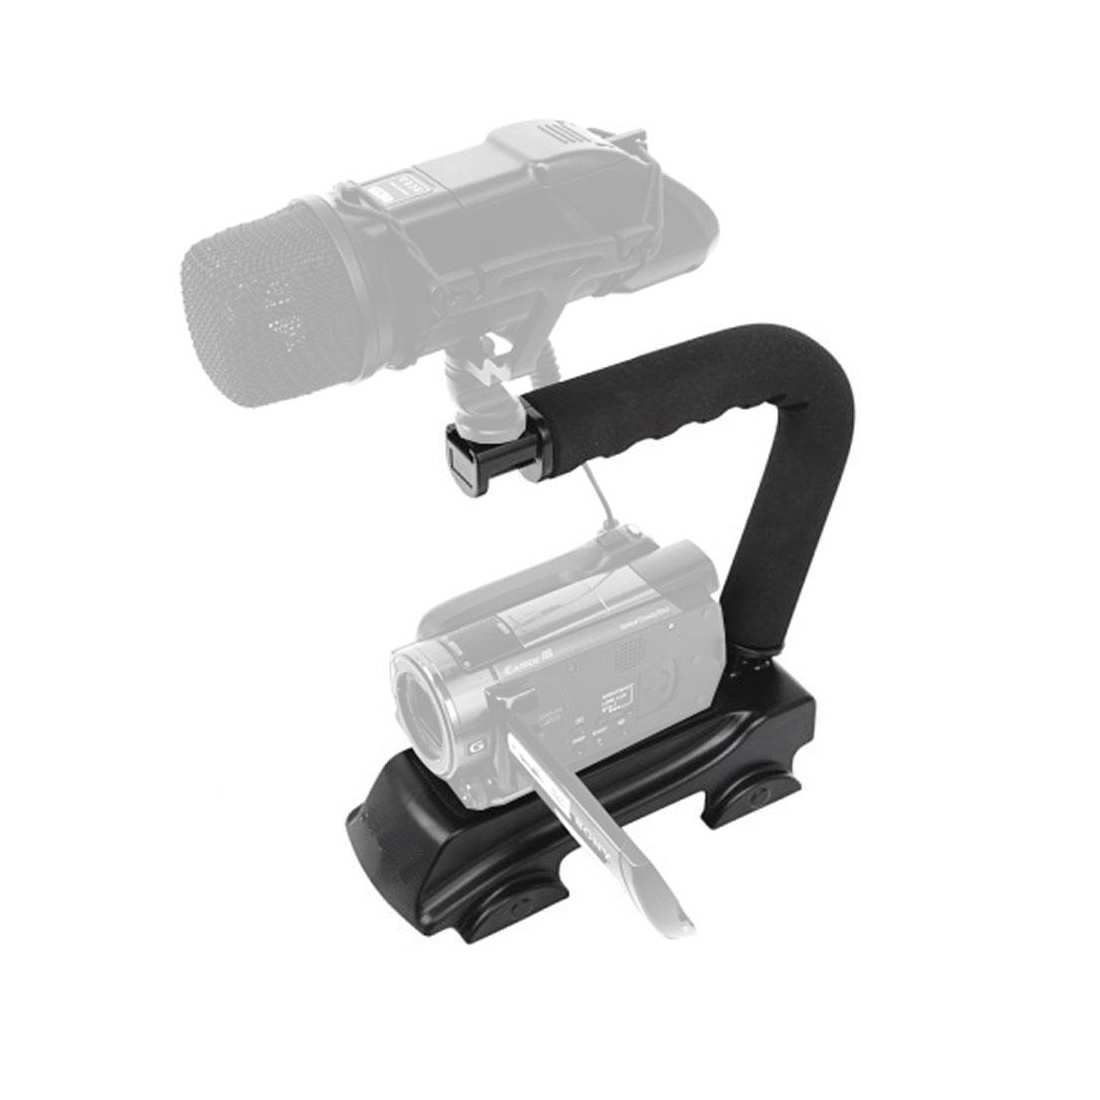 Action Stabilizing Video Handle Grip Bracket Rig for DSLR ริกติดกล้องวิดีโอ / DSLR / Mirrorless ราคา 199 บาท